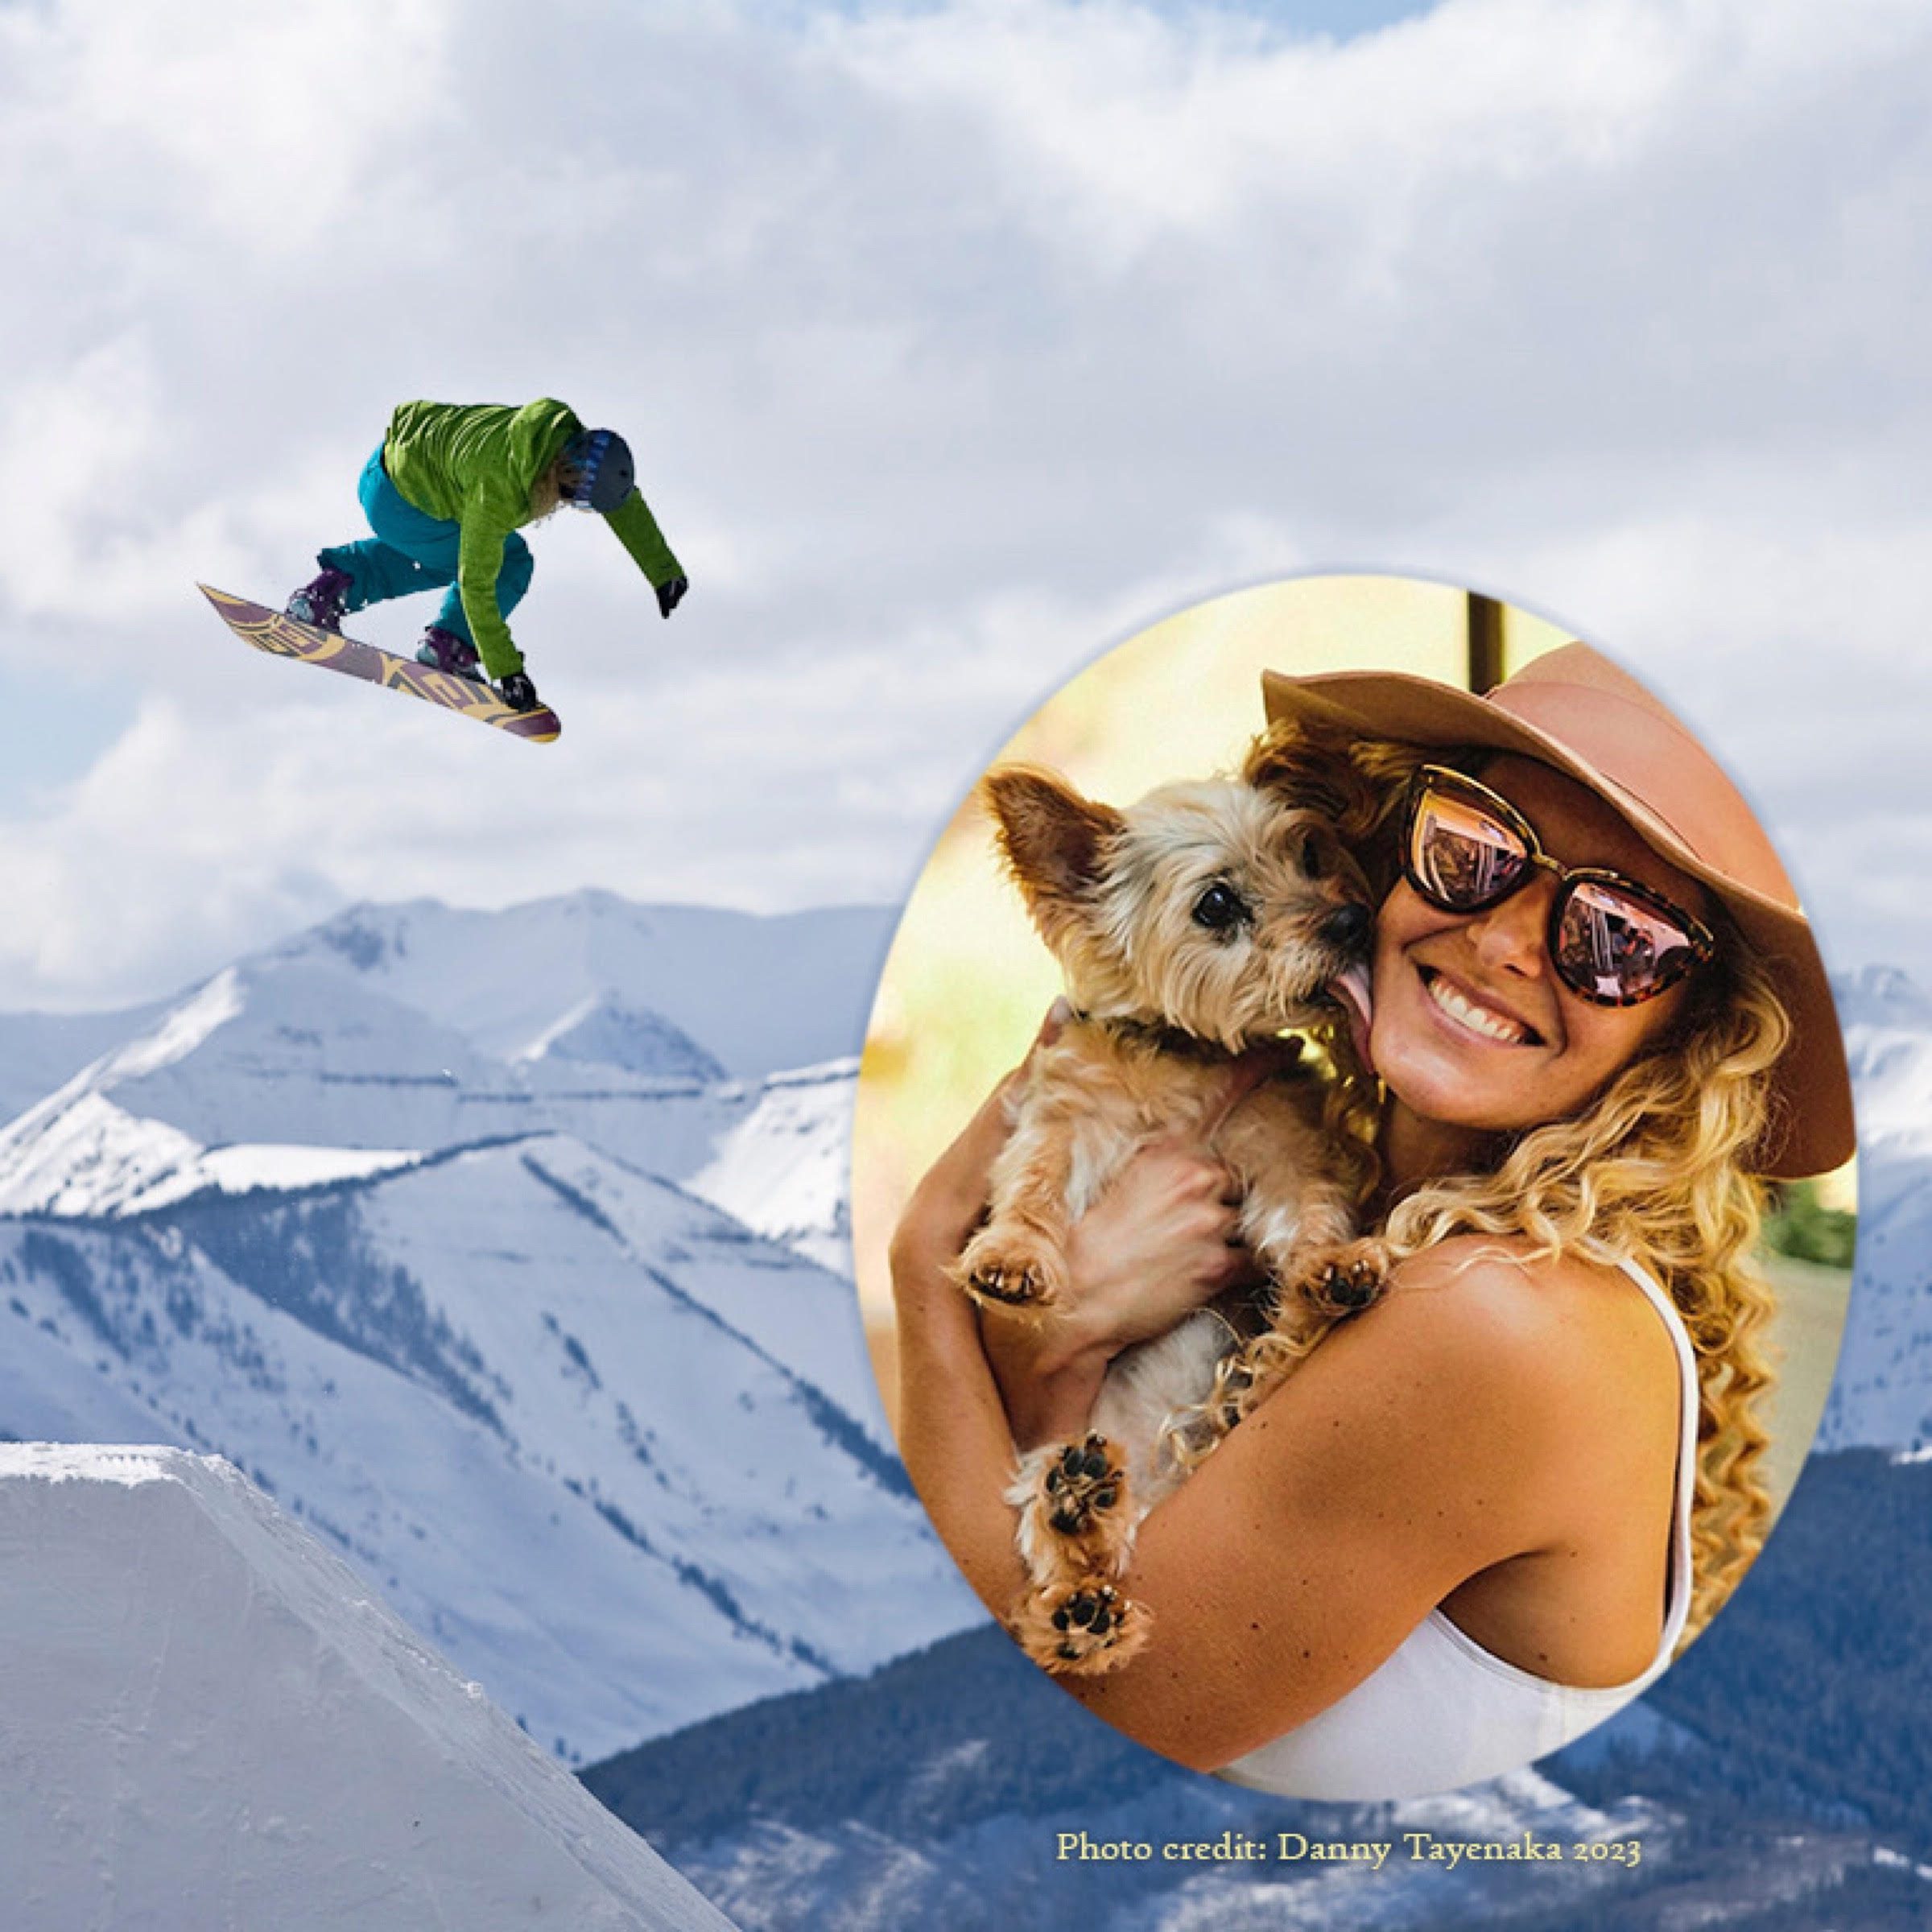 2X Olympic Gold Snowboarder Lindsey Jacobellis via 360 Magazine